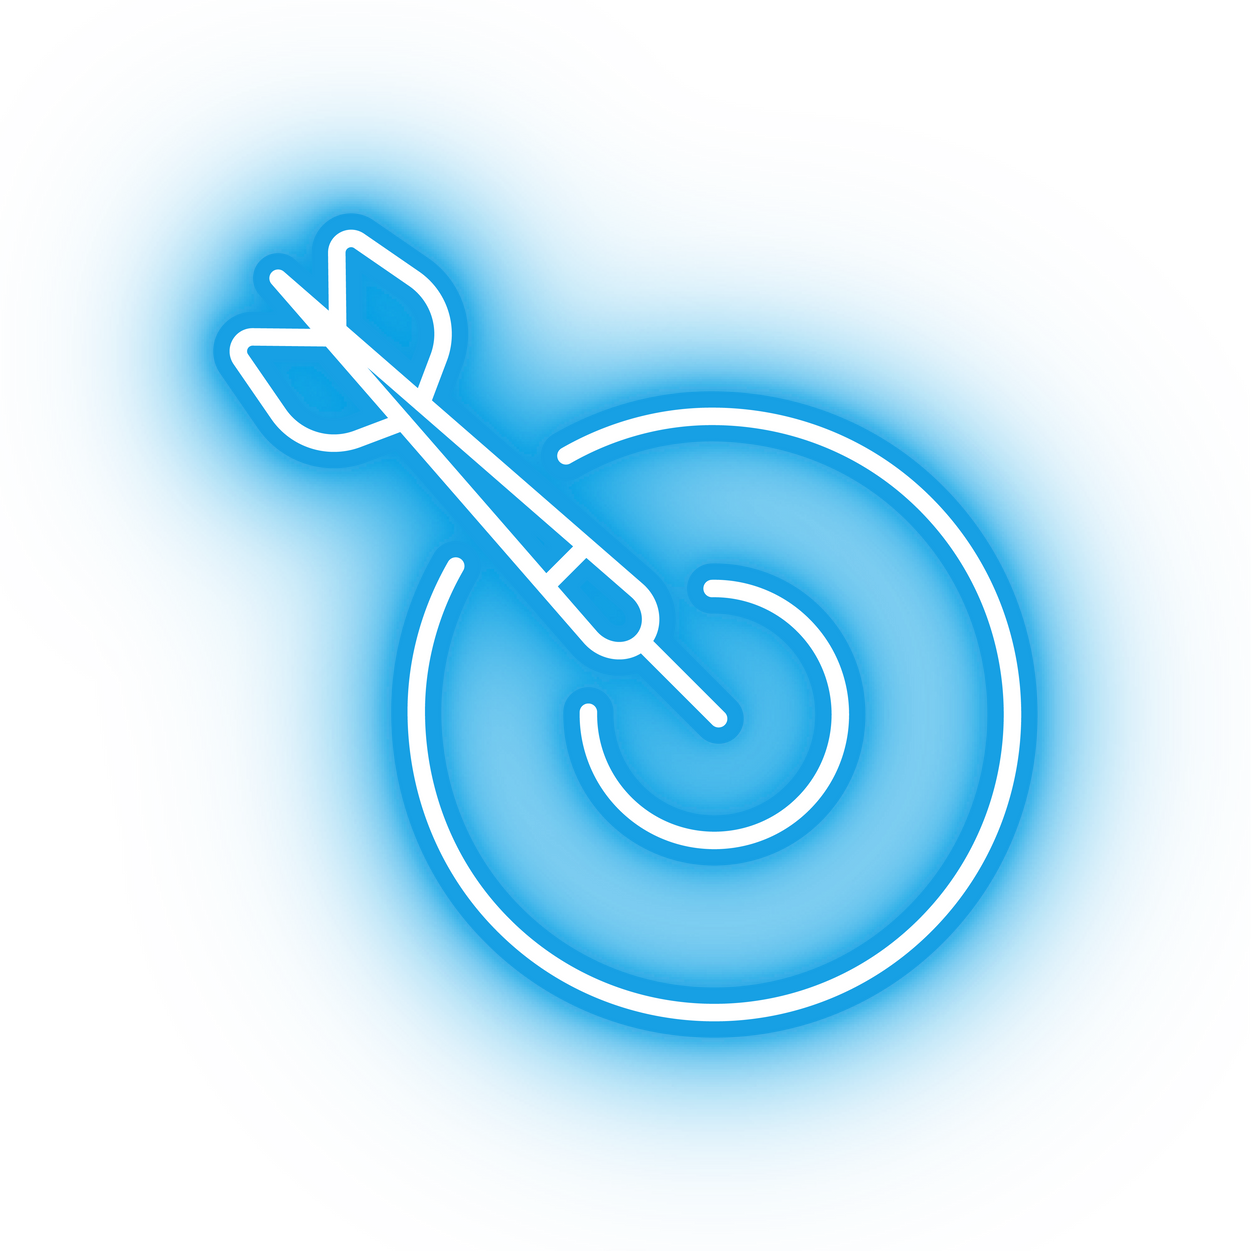 Neon blue darts icon